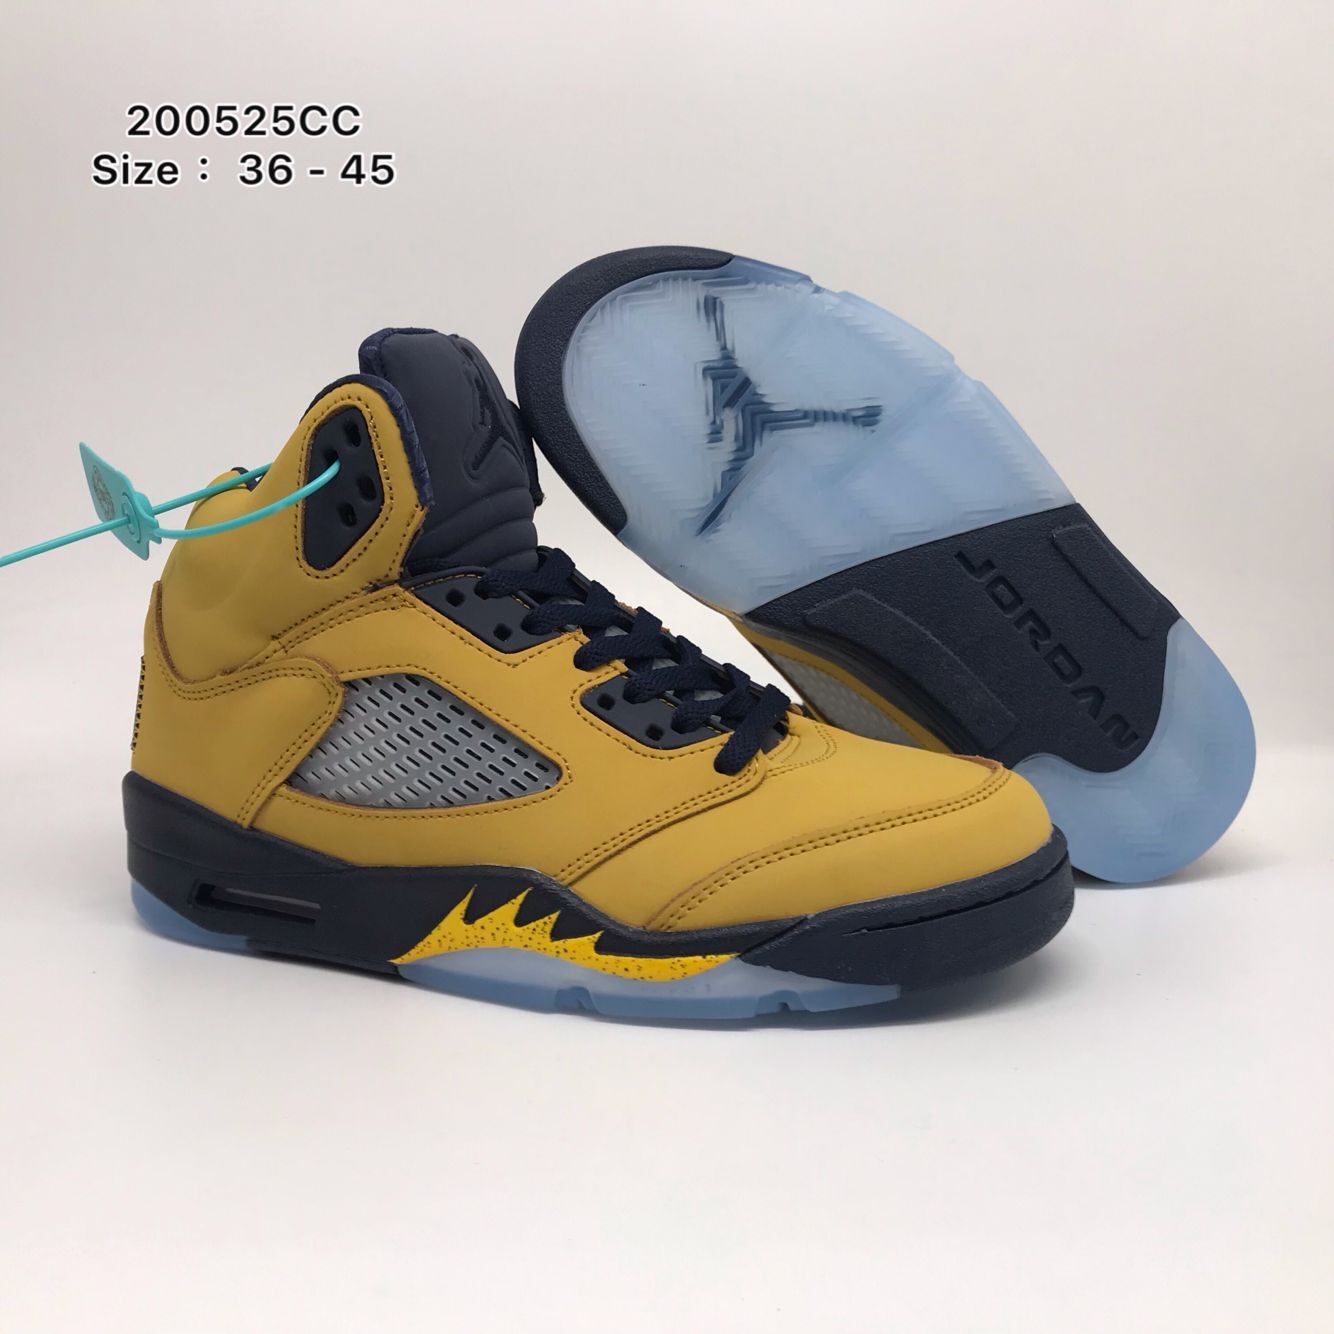 New Air Jordan 5 Michkgan Yellow Navy Blue Shoes [20og6304] - $85.00 : Original Jordan Shoes 